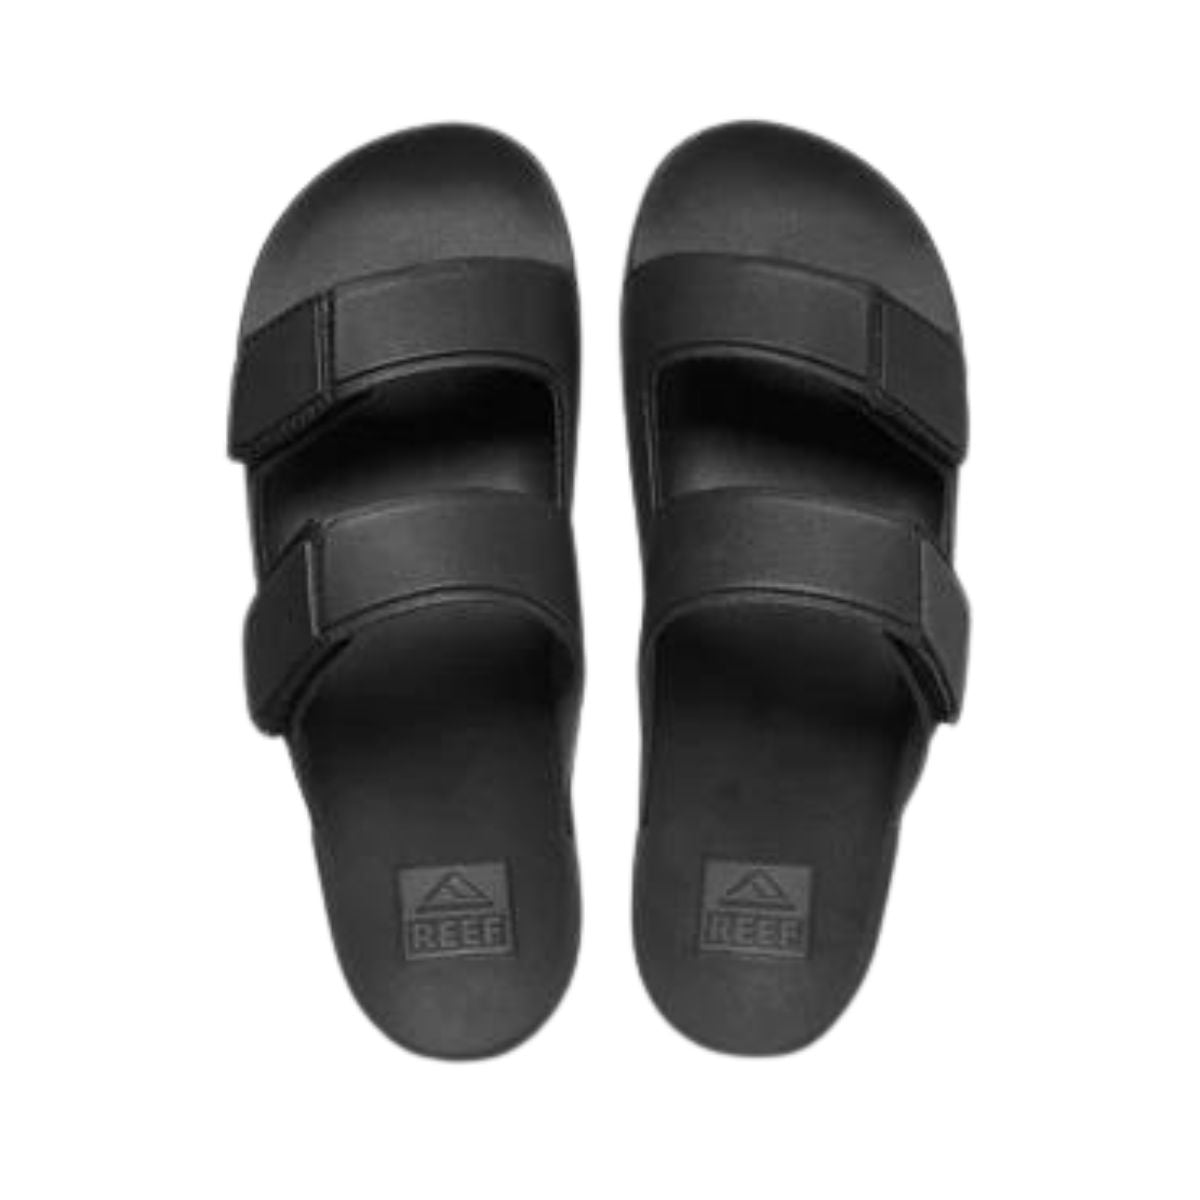 Reef Cushion Tradewind Men's Sandal in Black - BoardCo